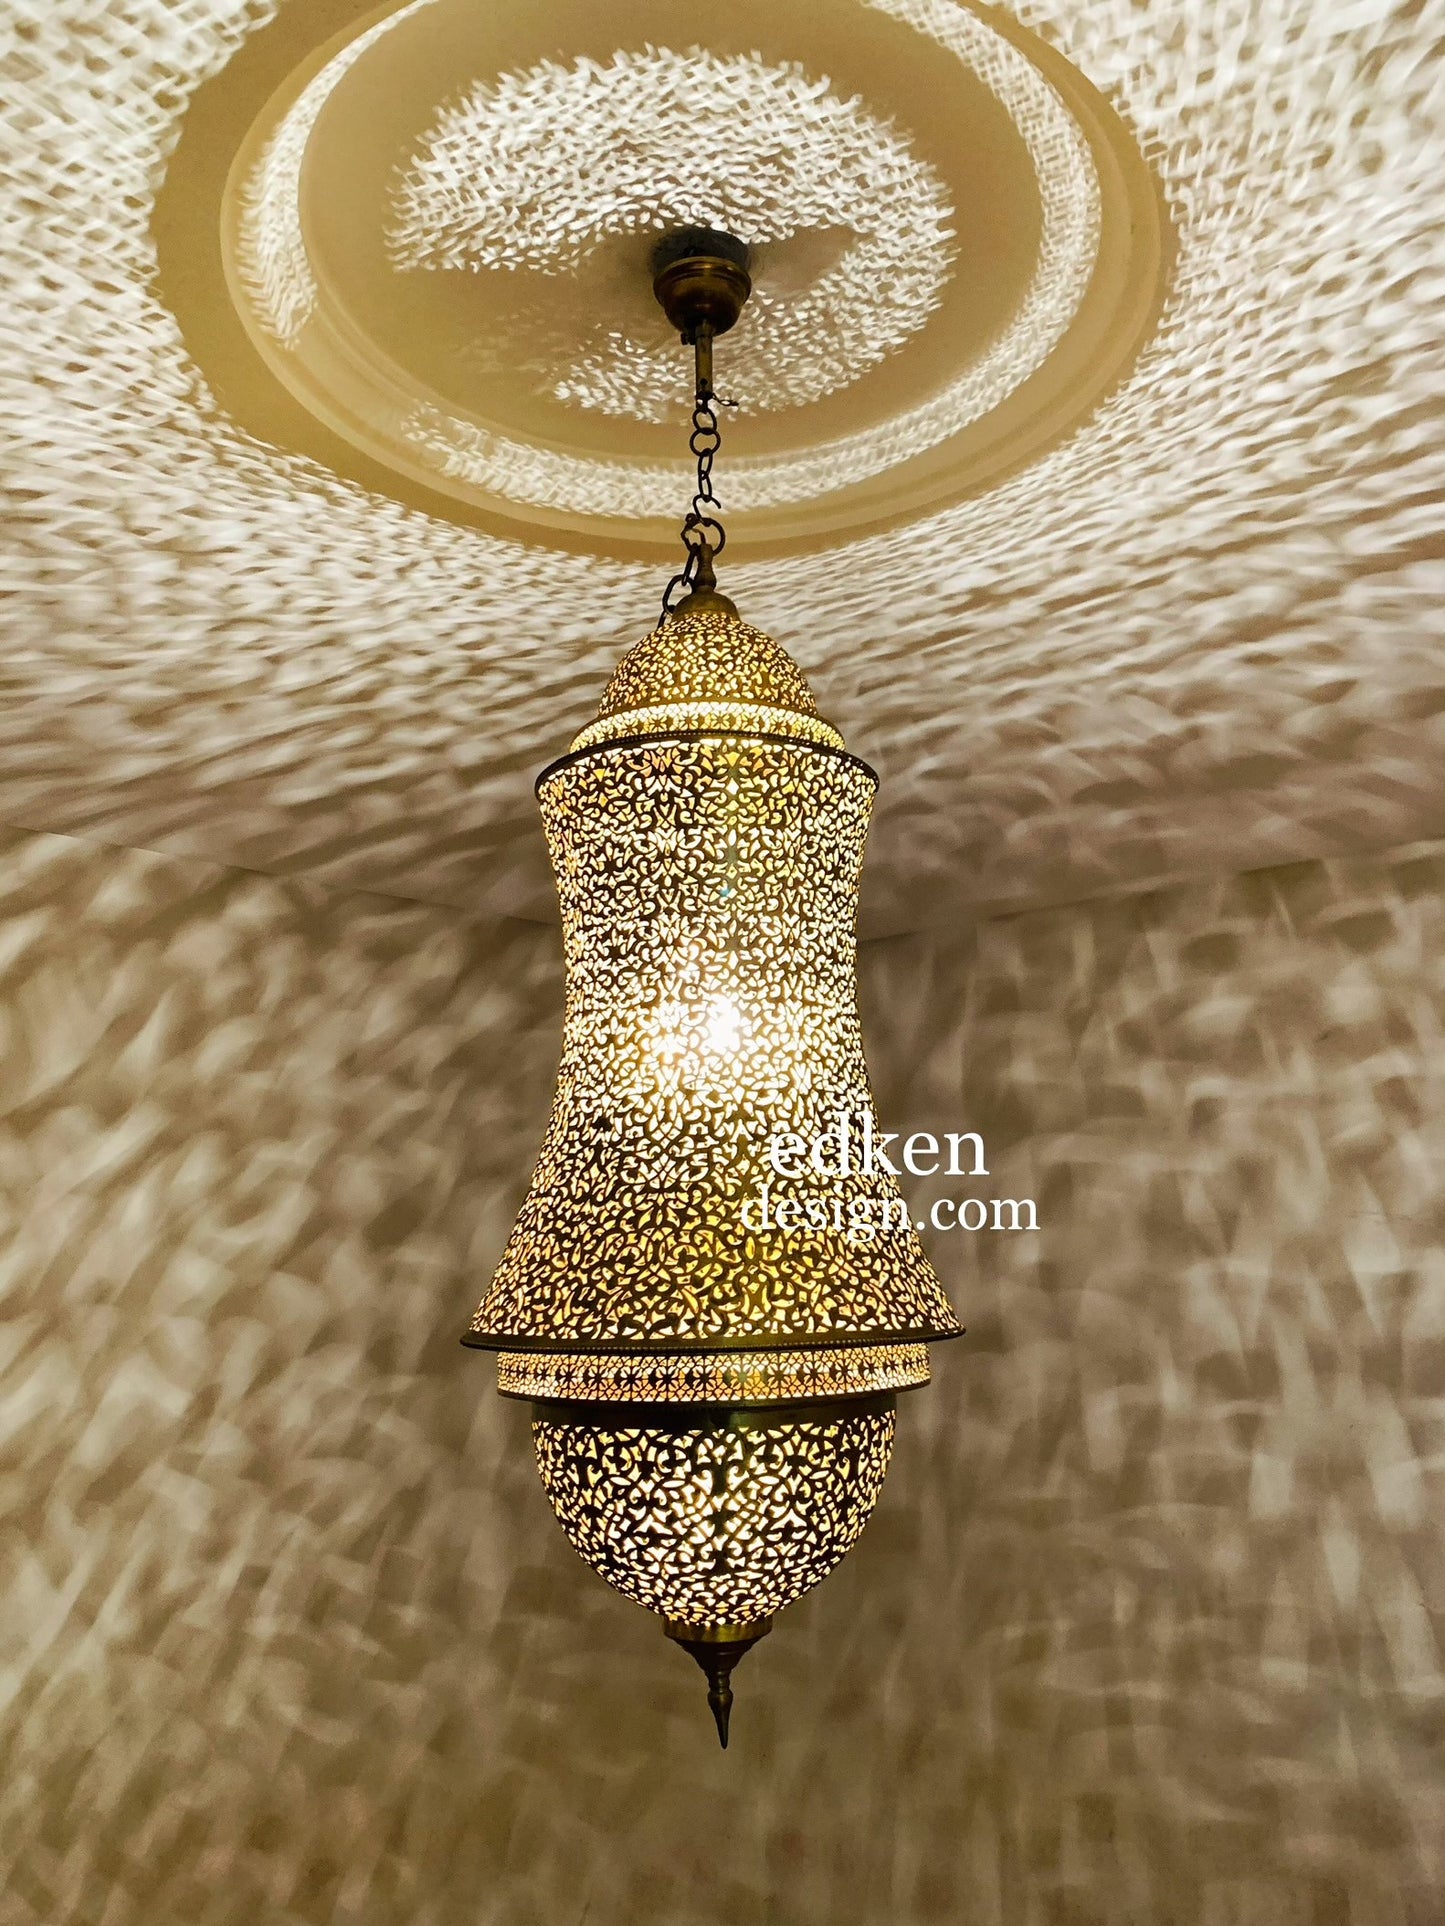 EDKEN LIGHTS - Morocco Ceiling Chandelier Large Hanging Lamp Shades Fixture Moorish Lights Handmade Brass in Morocco 